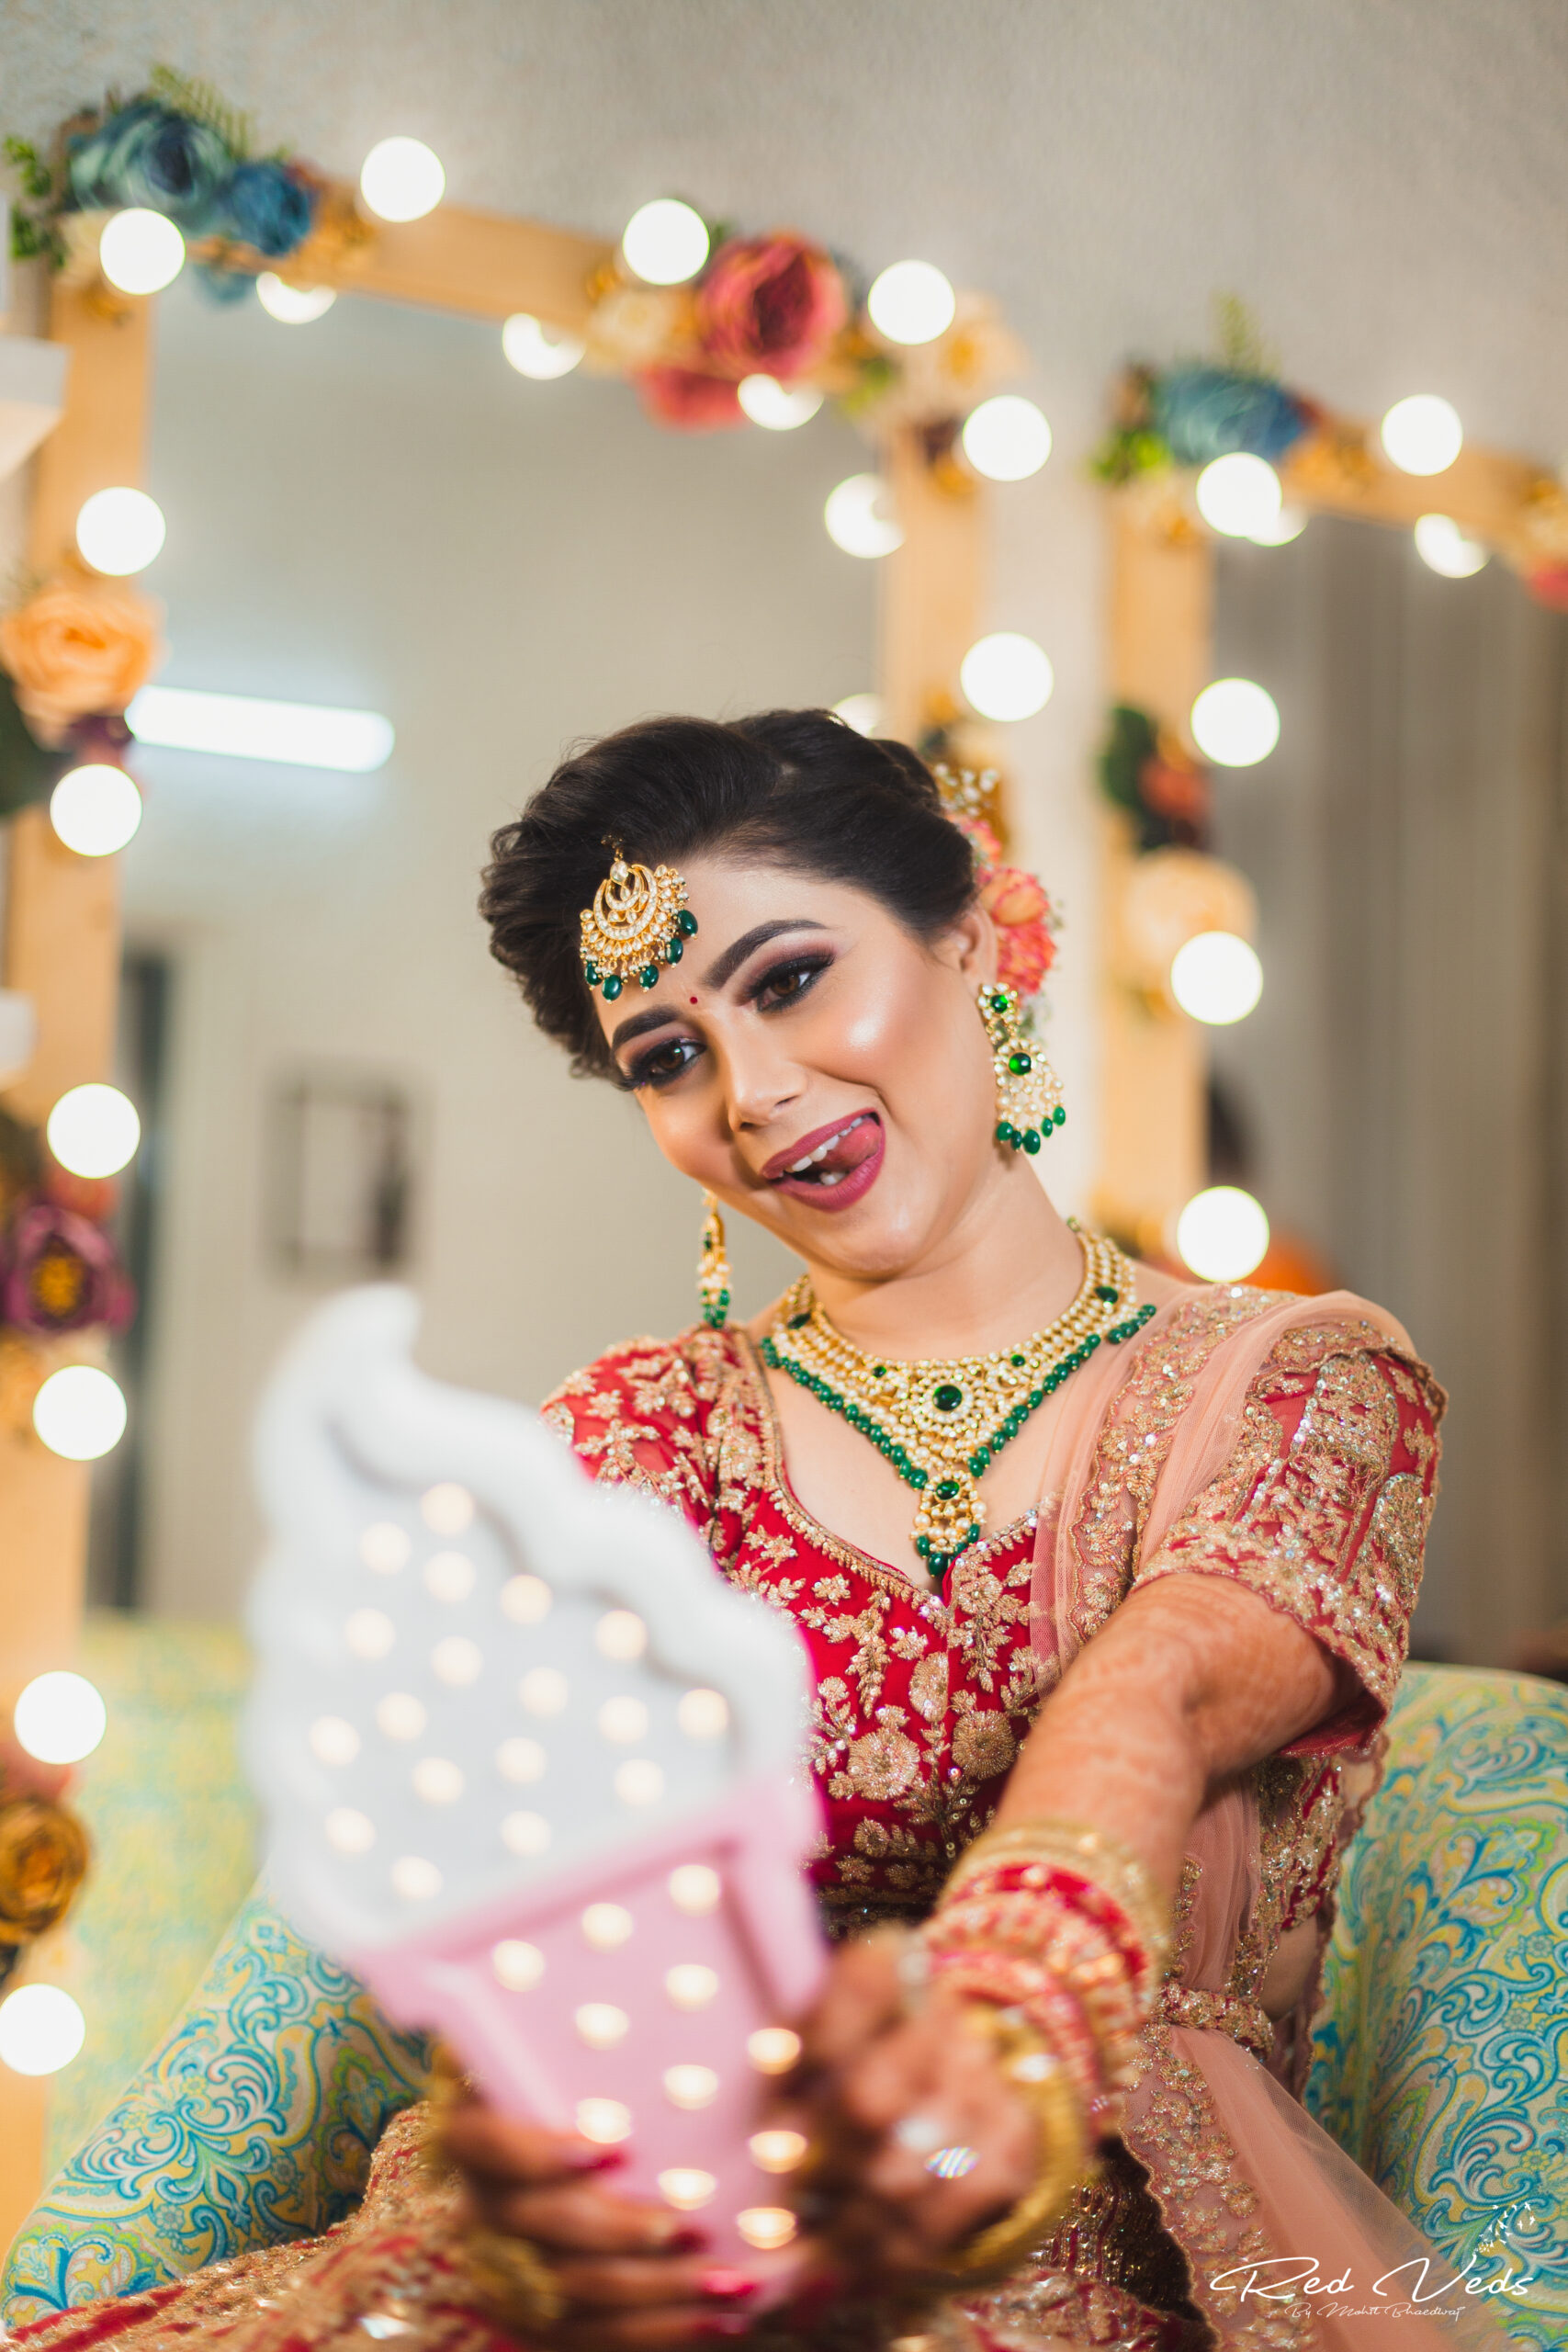 Ideas creative photography | Indian wedding photography poses, Indian bride  photography poses, Indian wedding couple photography